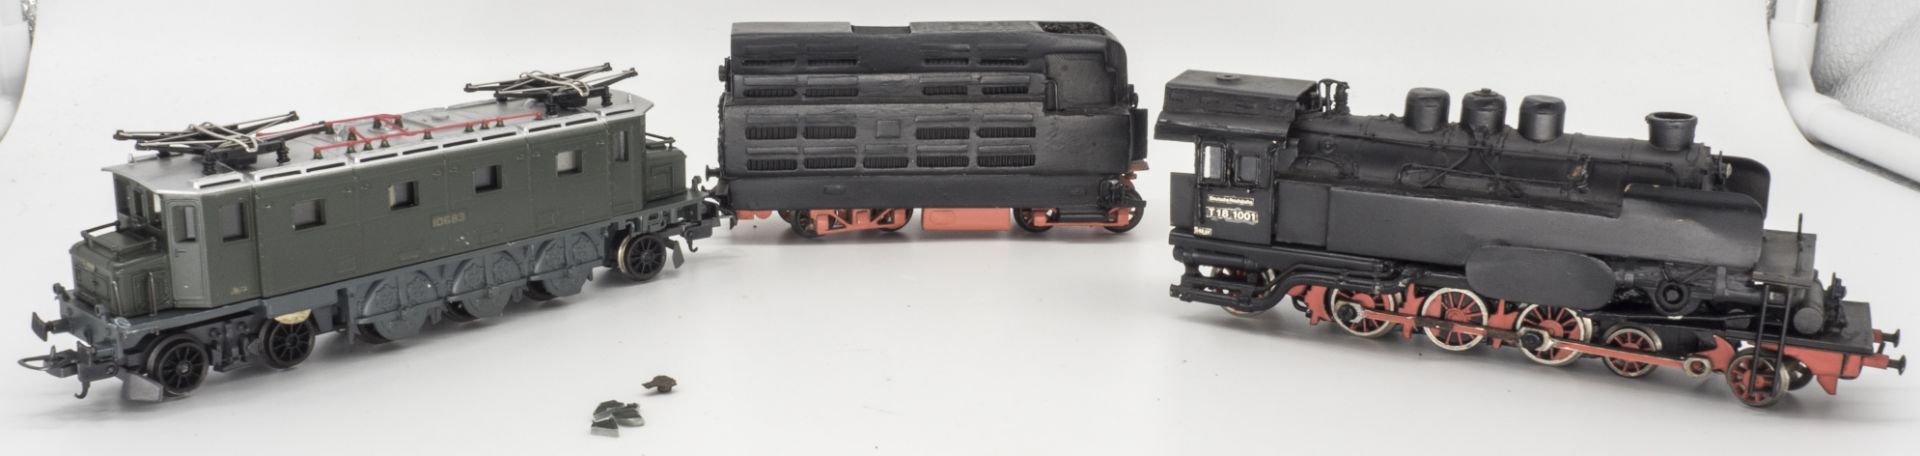 Zwei Lokomotiven: 1 x Lima E - Lokomotive 10683, Gehäuse defekt und 1 x Dampflokomotive BR T 18 - Image 5 of 6